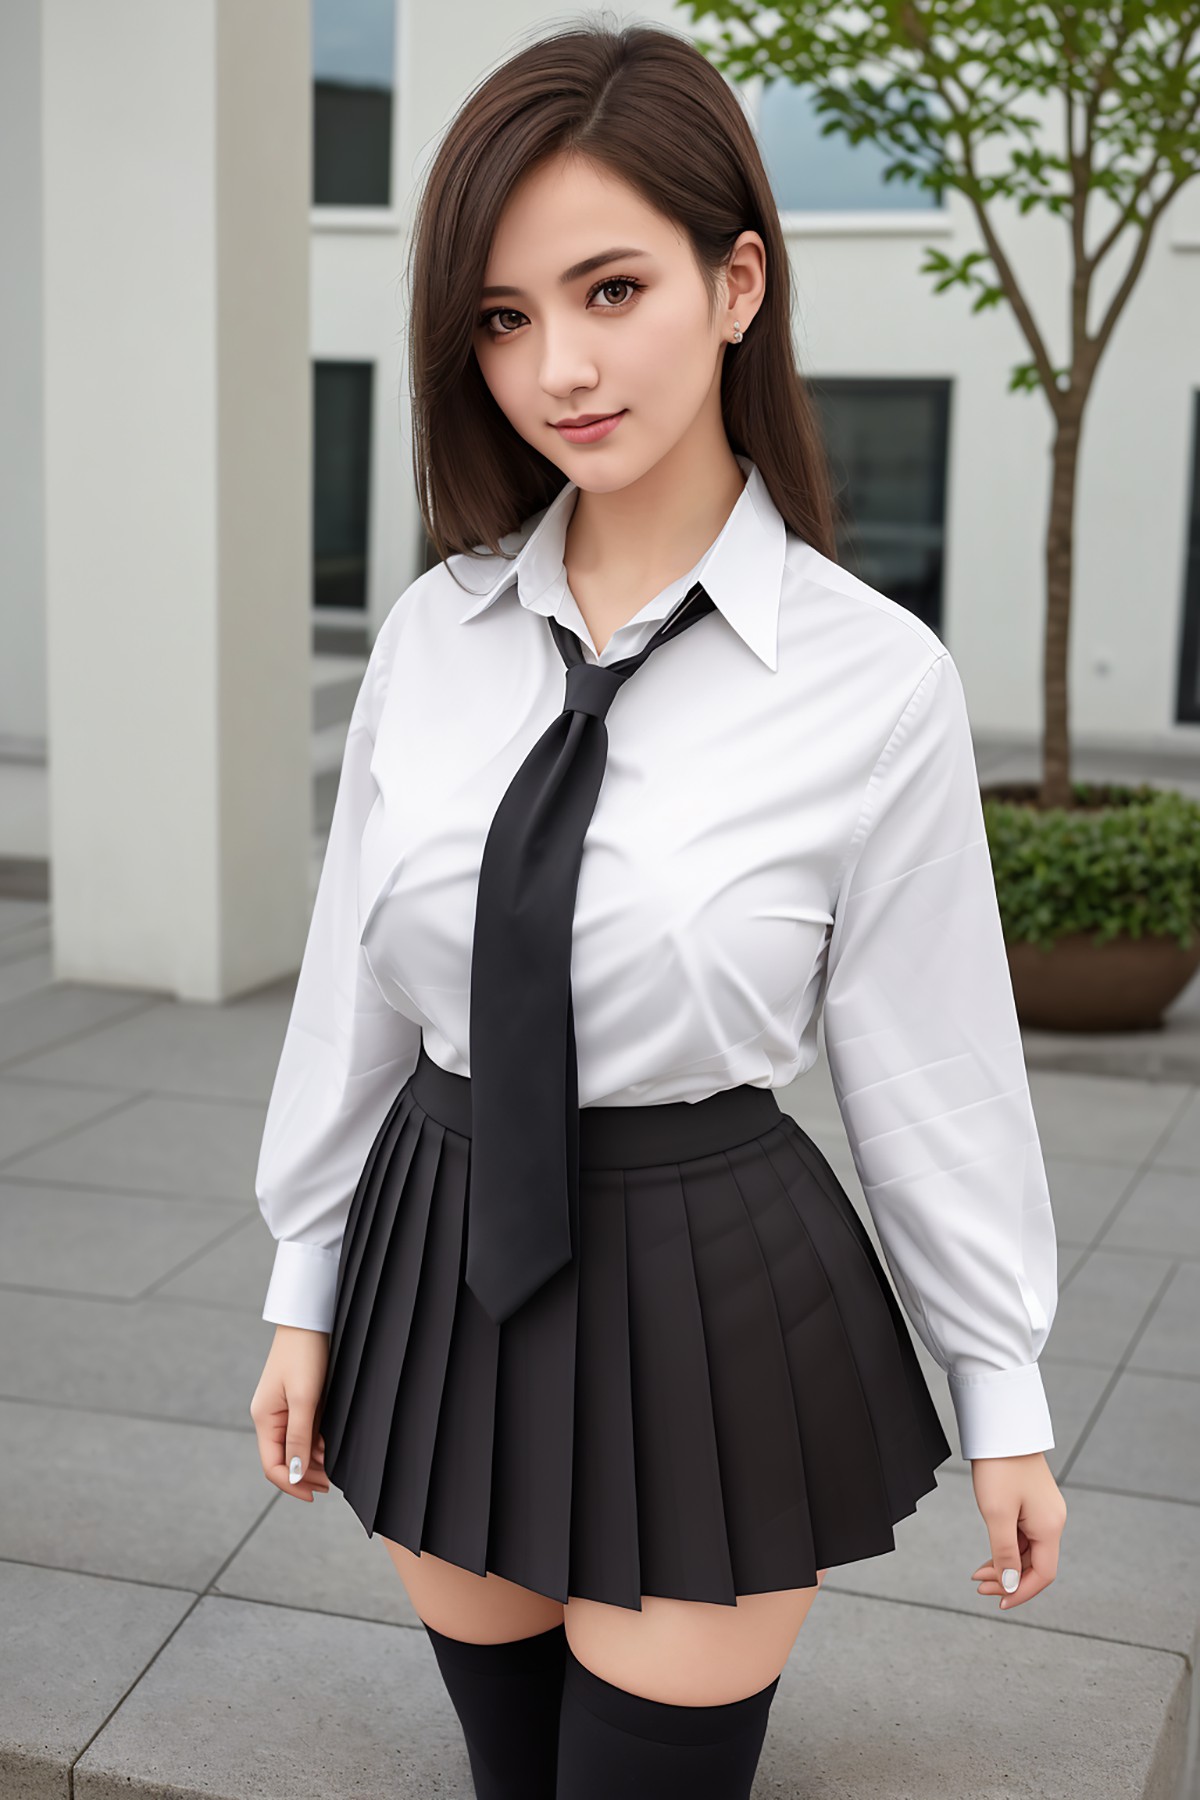 AIModel Vol 133 Sexy White Shirt With Black Short Skirt 0032 5896625737.jpg